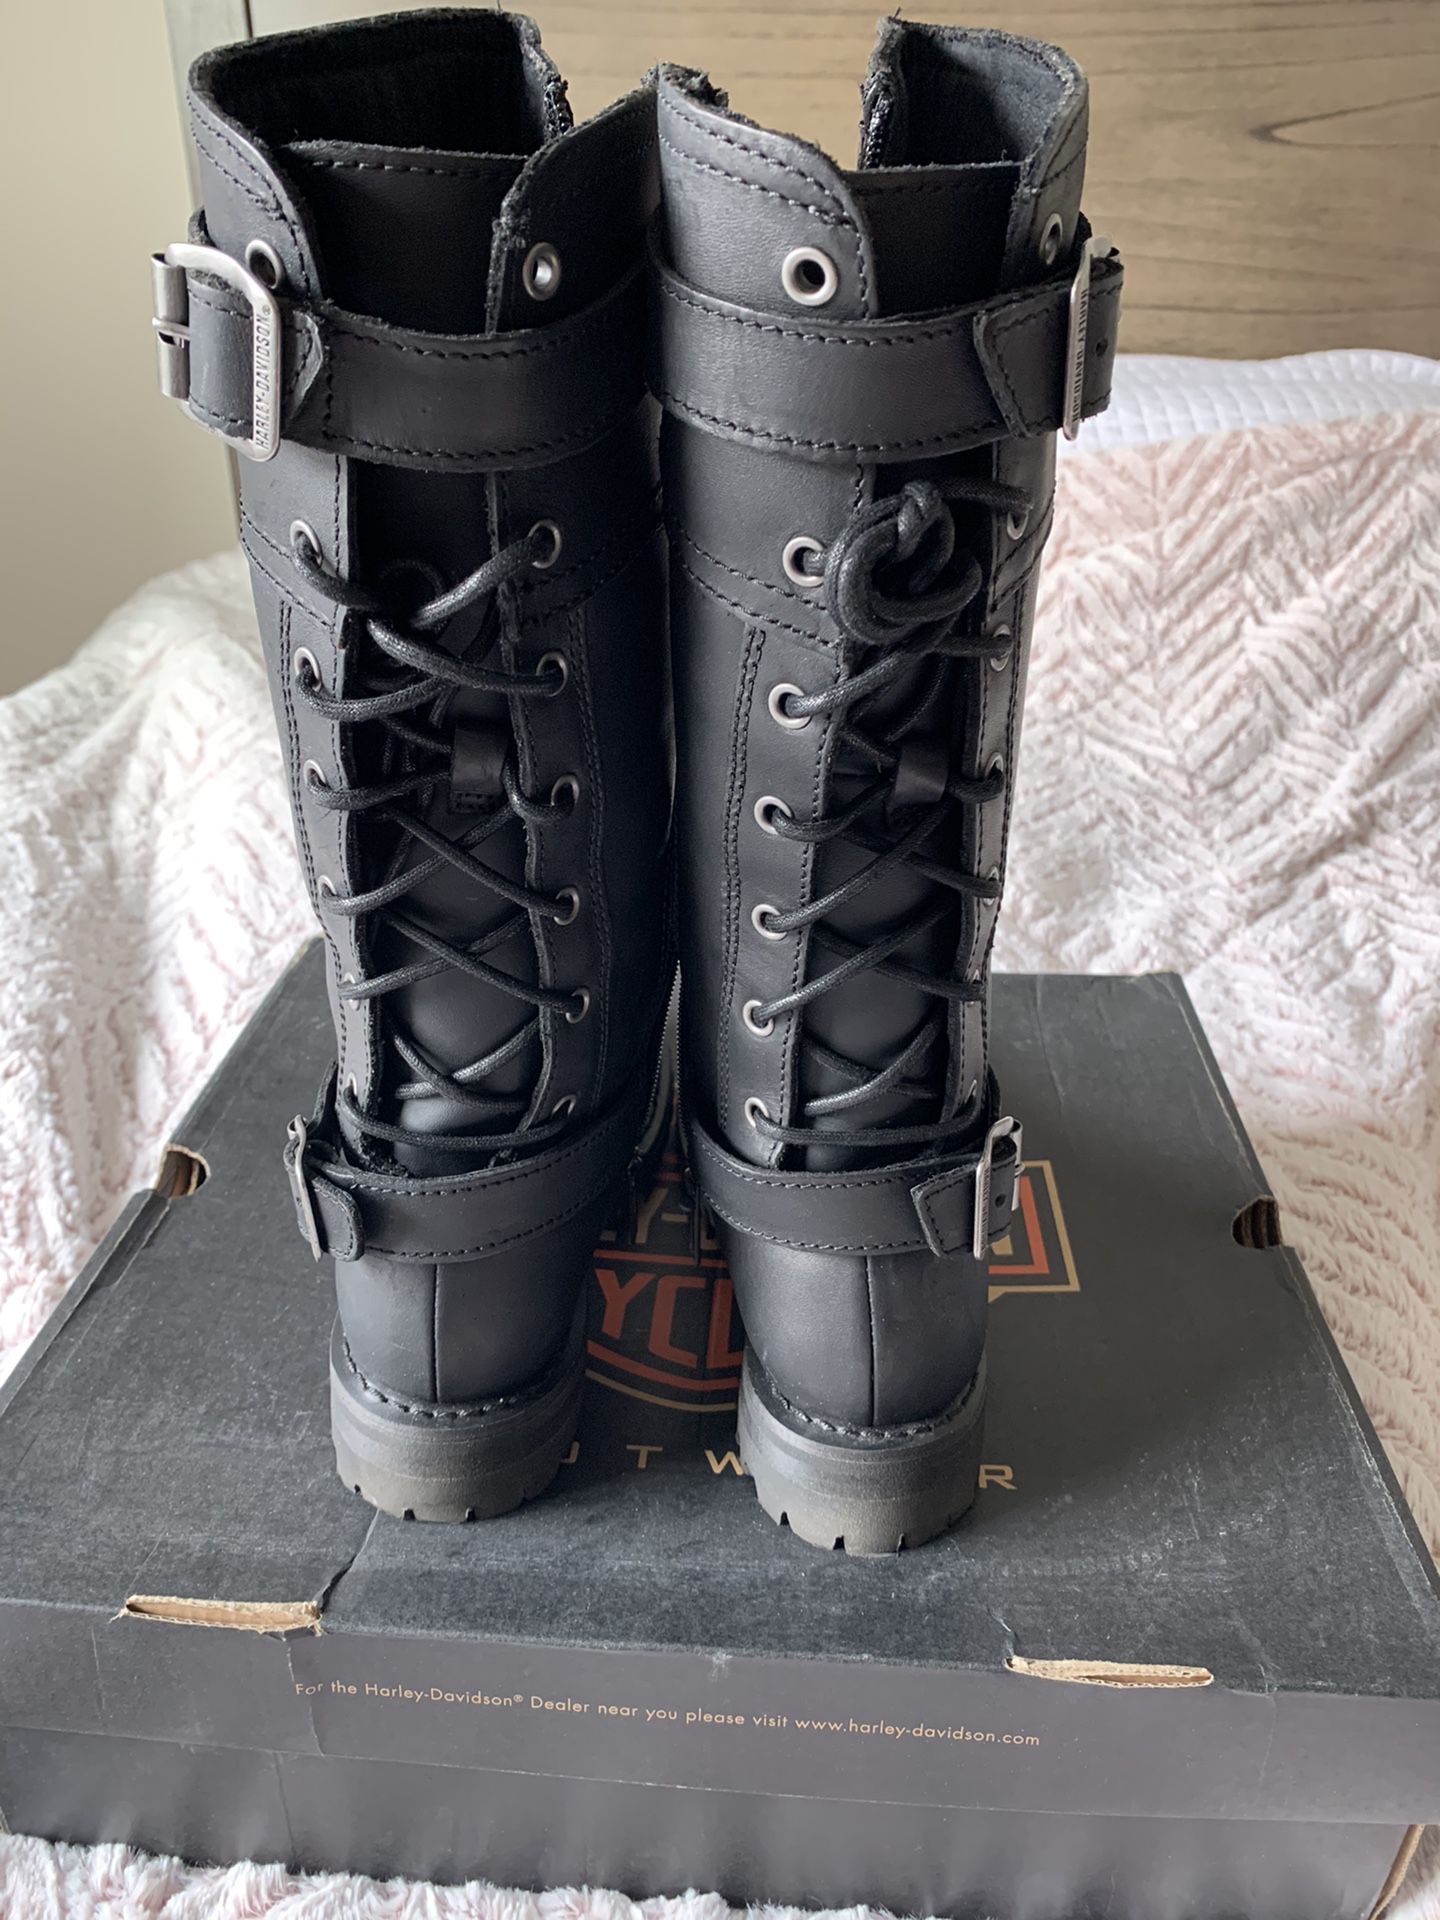 Harley Davidson Black Alexa boots Size 8.5